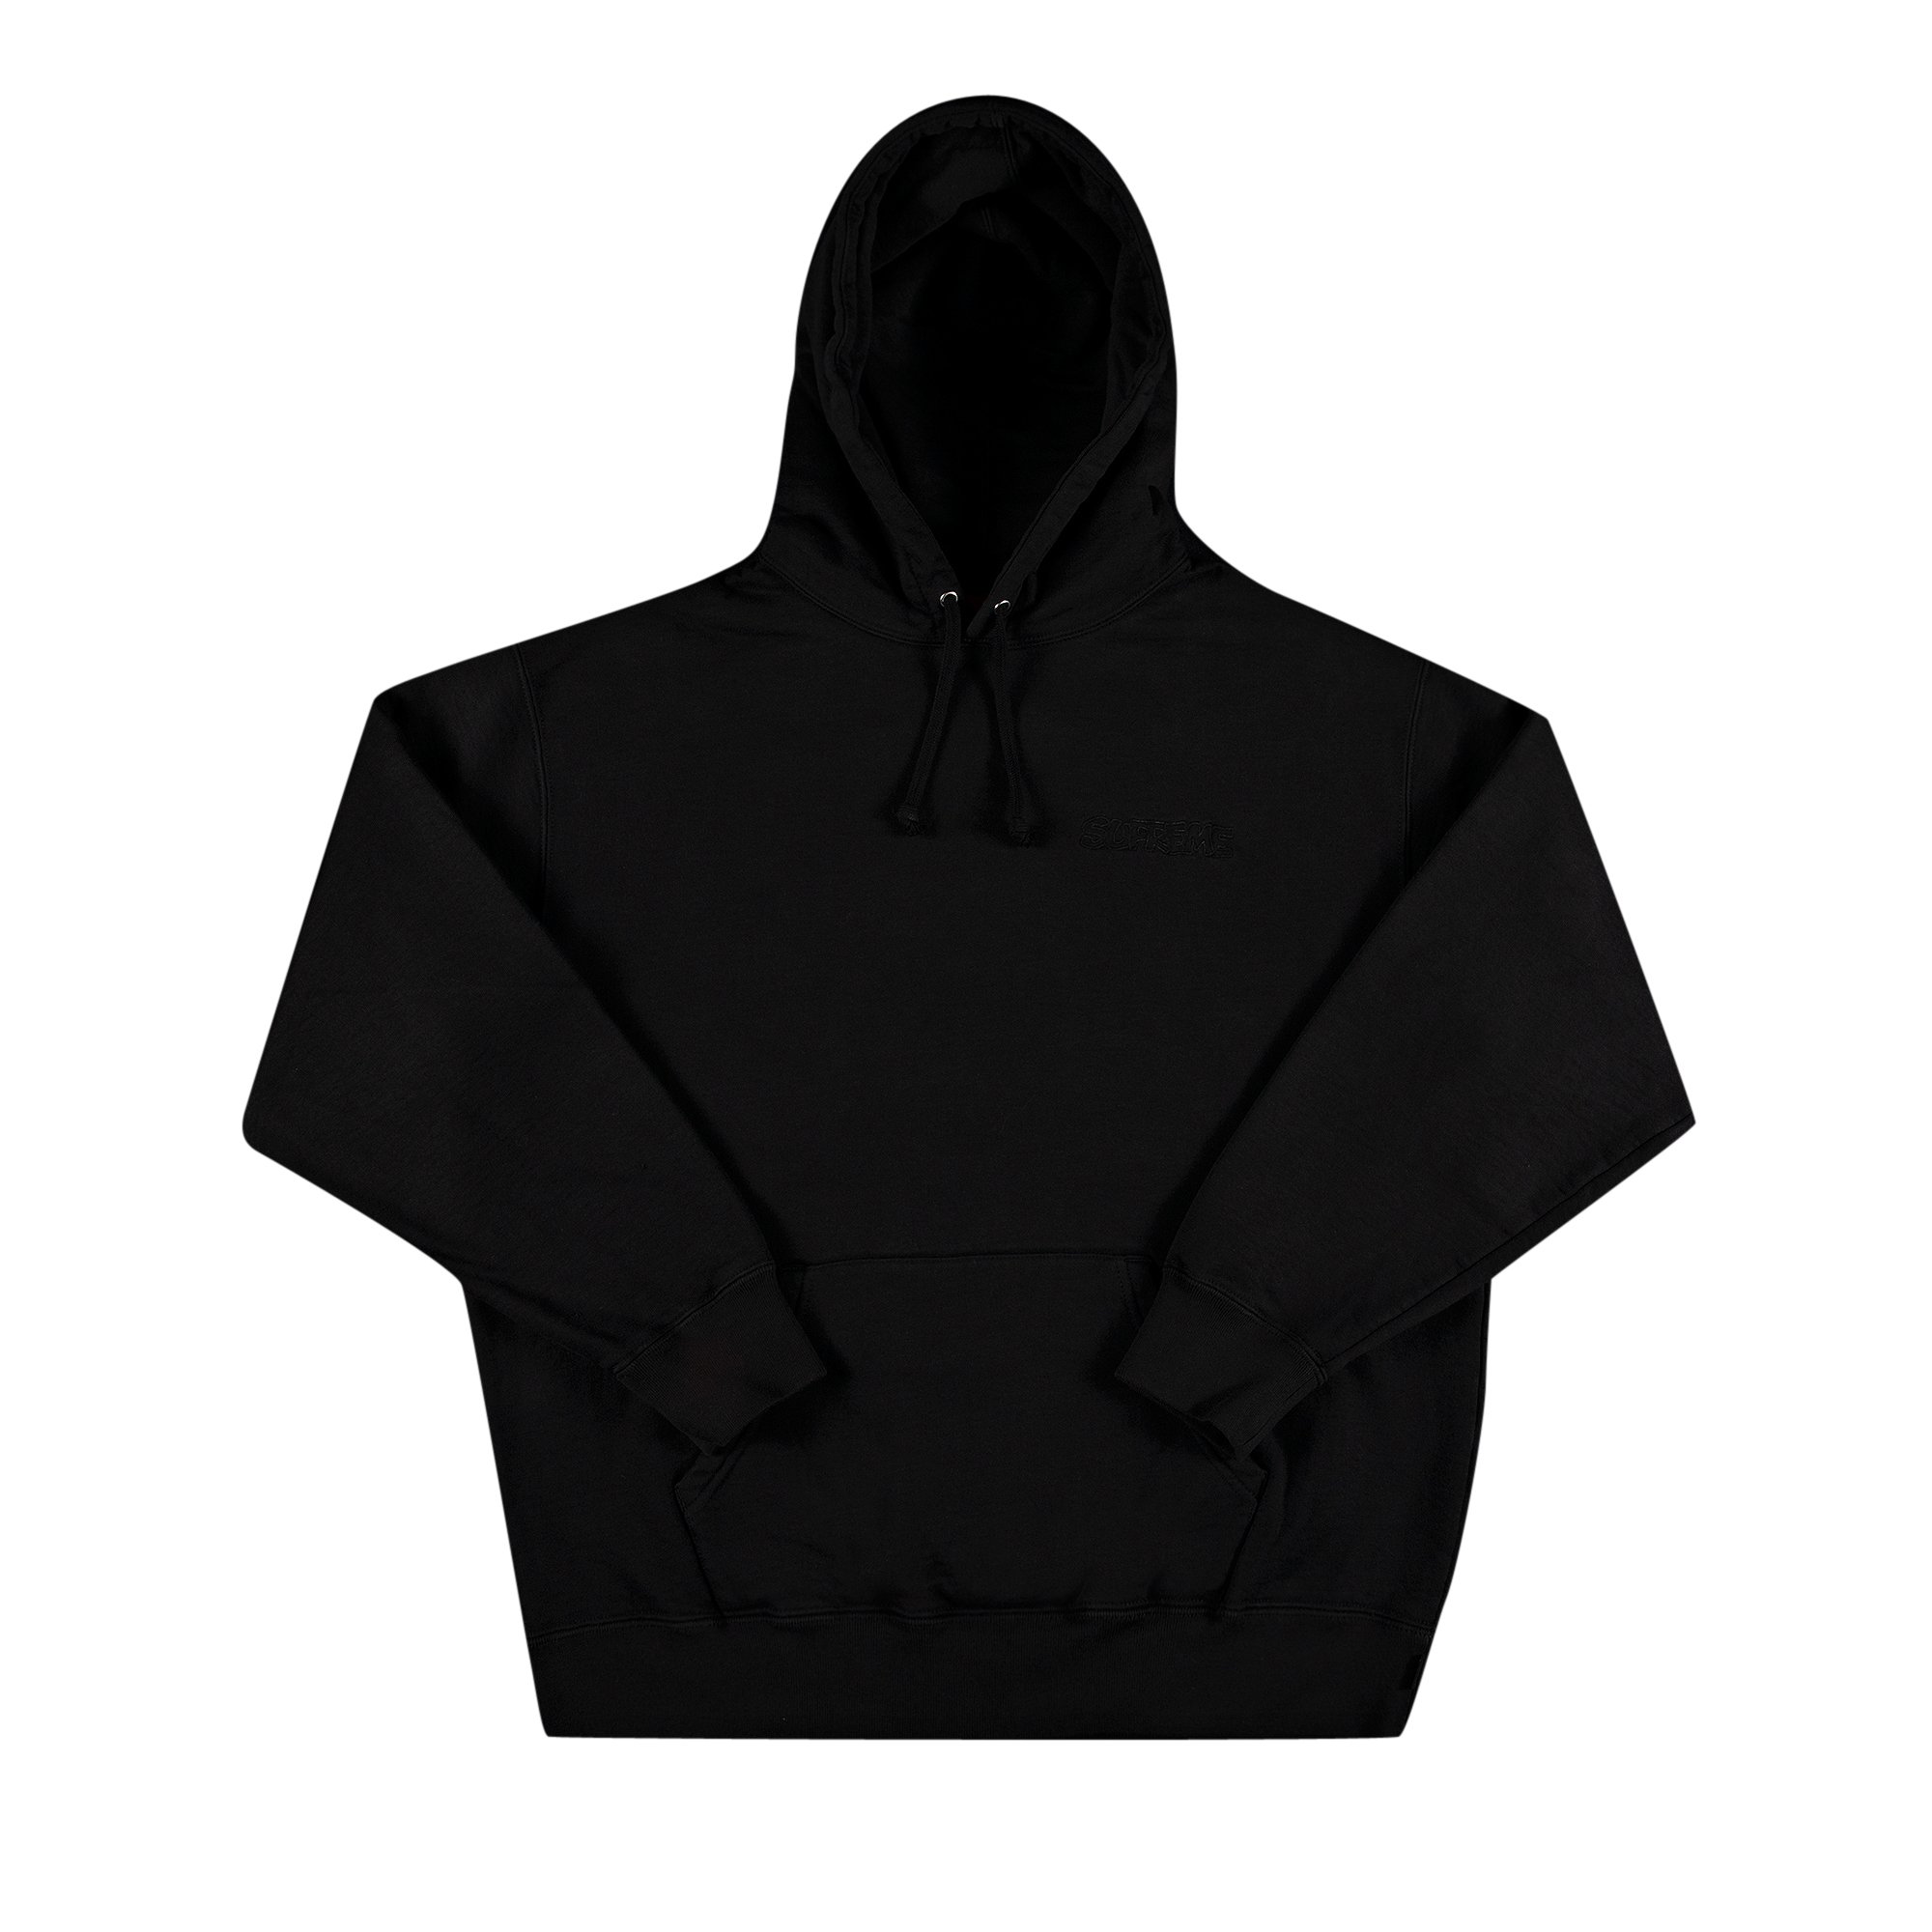 Buy Supreme x Smurfs Hooded Sweatshirt 'Black' - FW20SW22 BLACK | GOAT